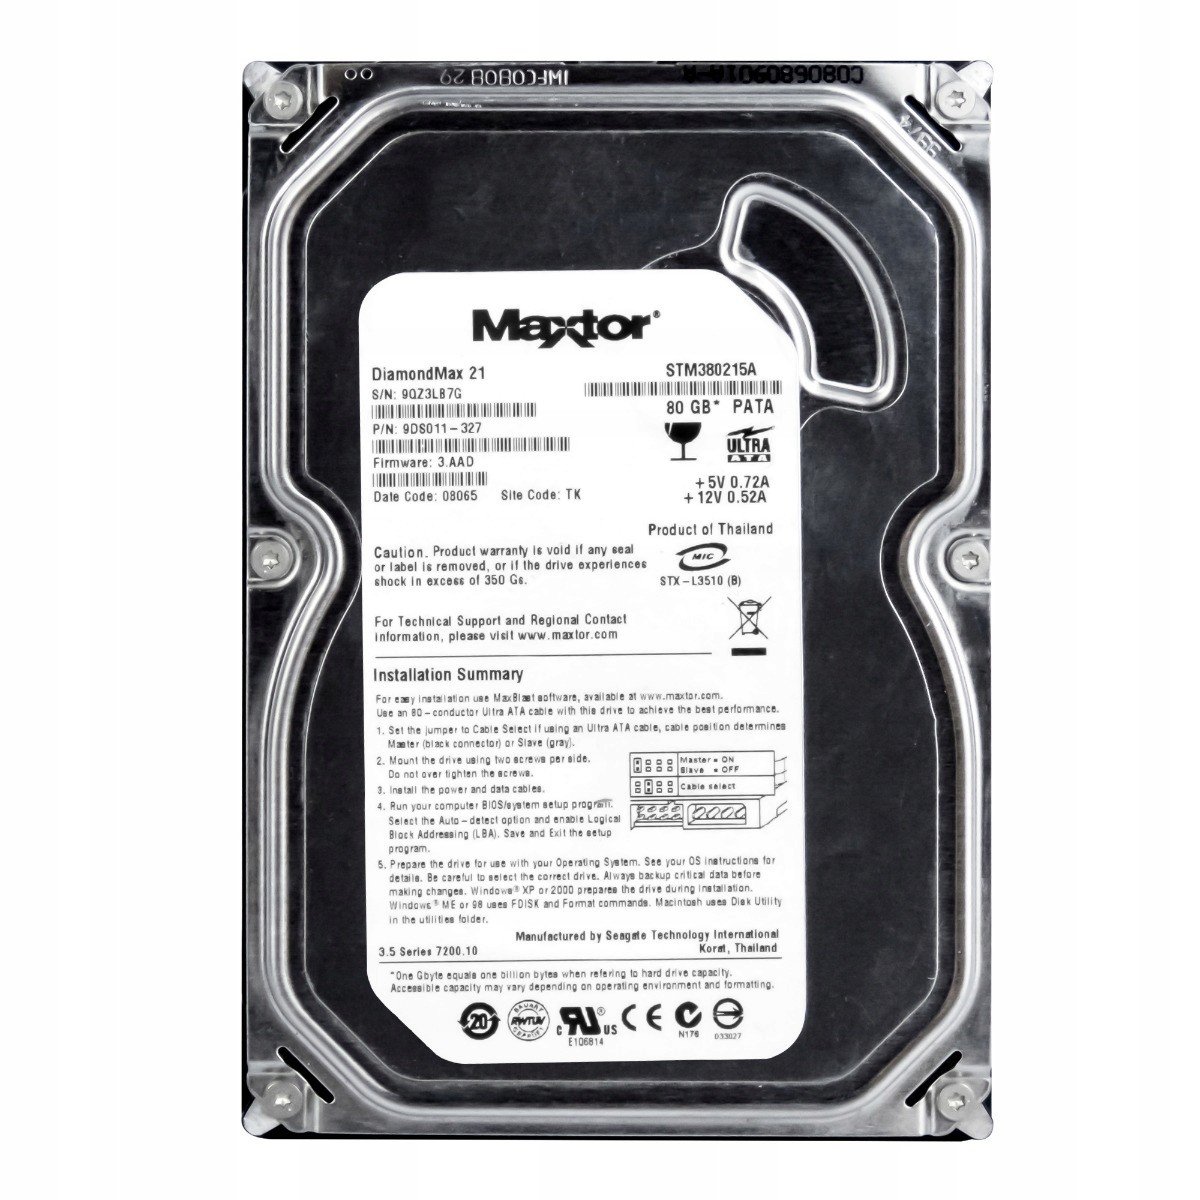 Maxtor DiamondMax 21 80GB 7.2K Ata 3.5' STM380215A